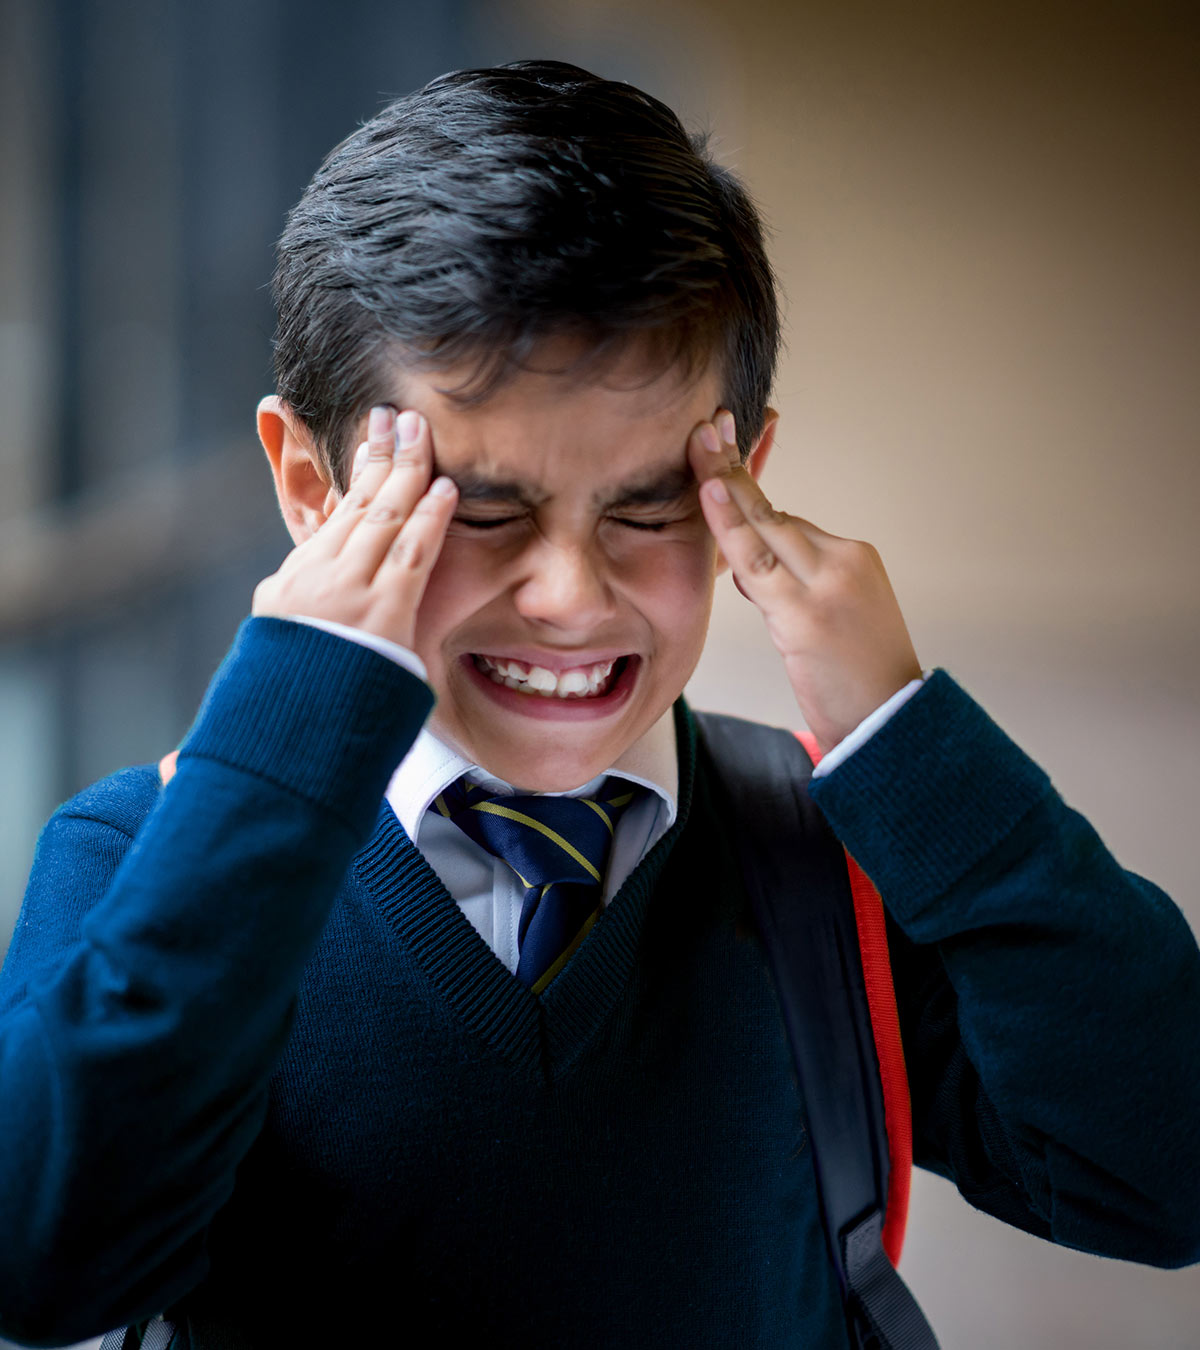 Headaches in Children: Symptoms, Diagnosis And Treatment